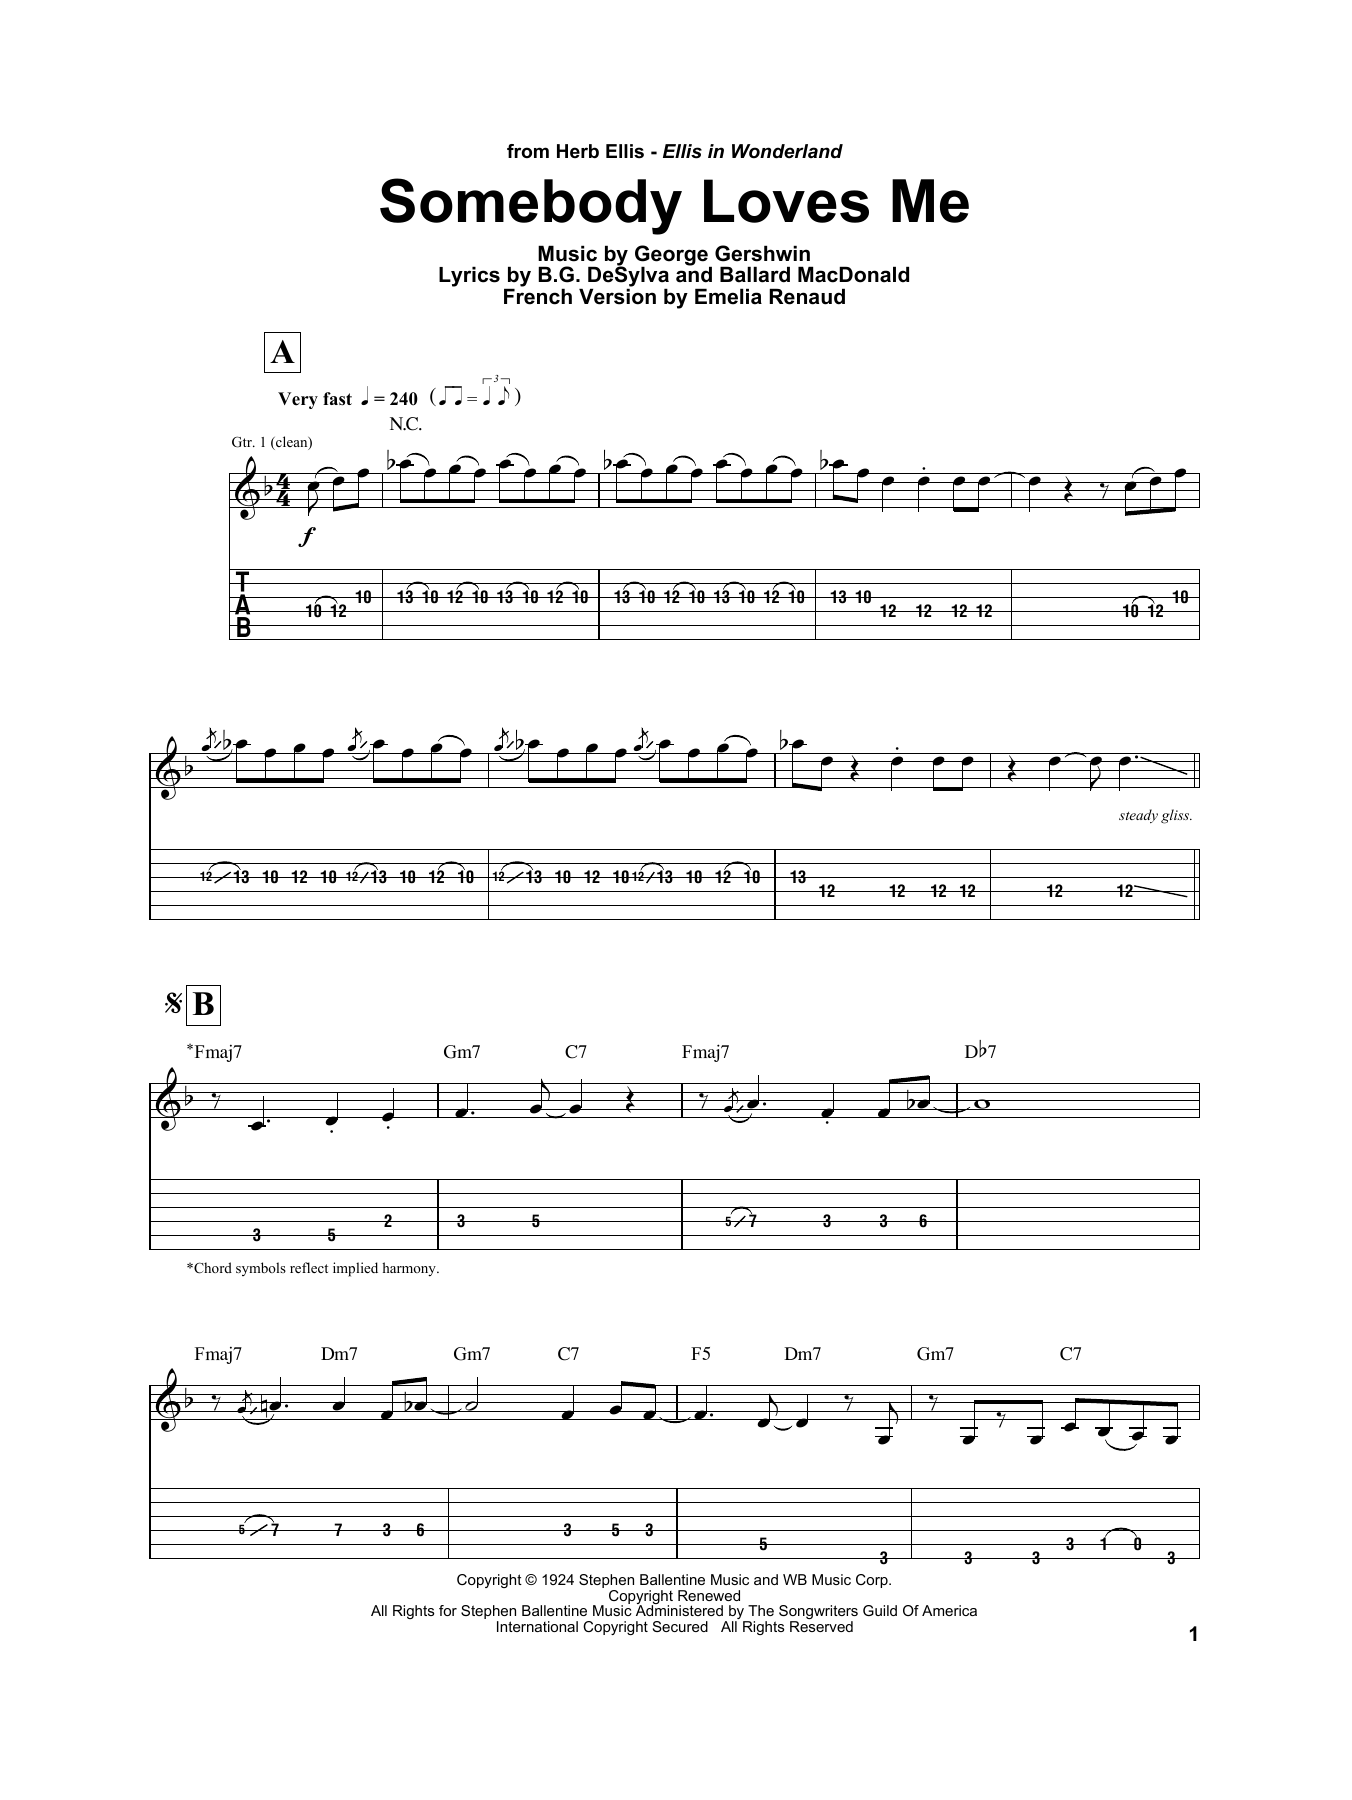 Herb Ellis Somebody Loves Me Sheet Music Notes & Chords for Electric Guitar Transcription - Download or Print PDF